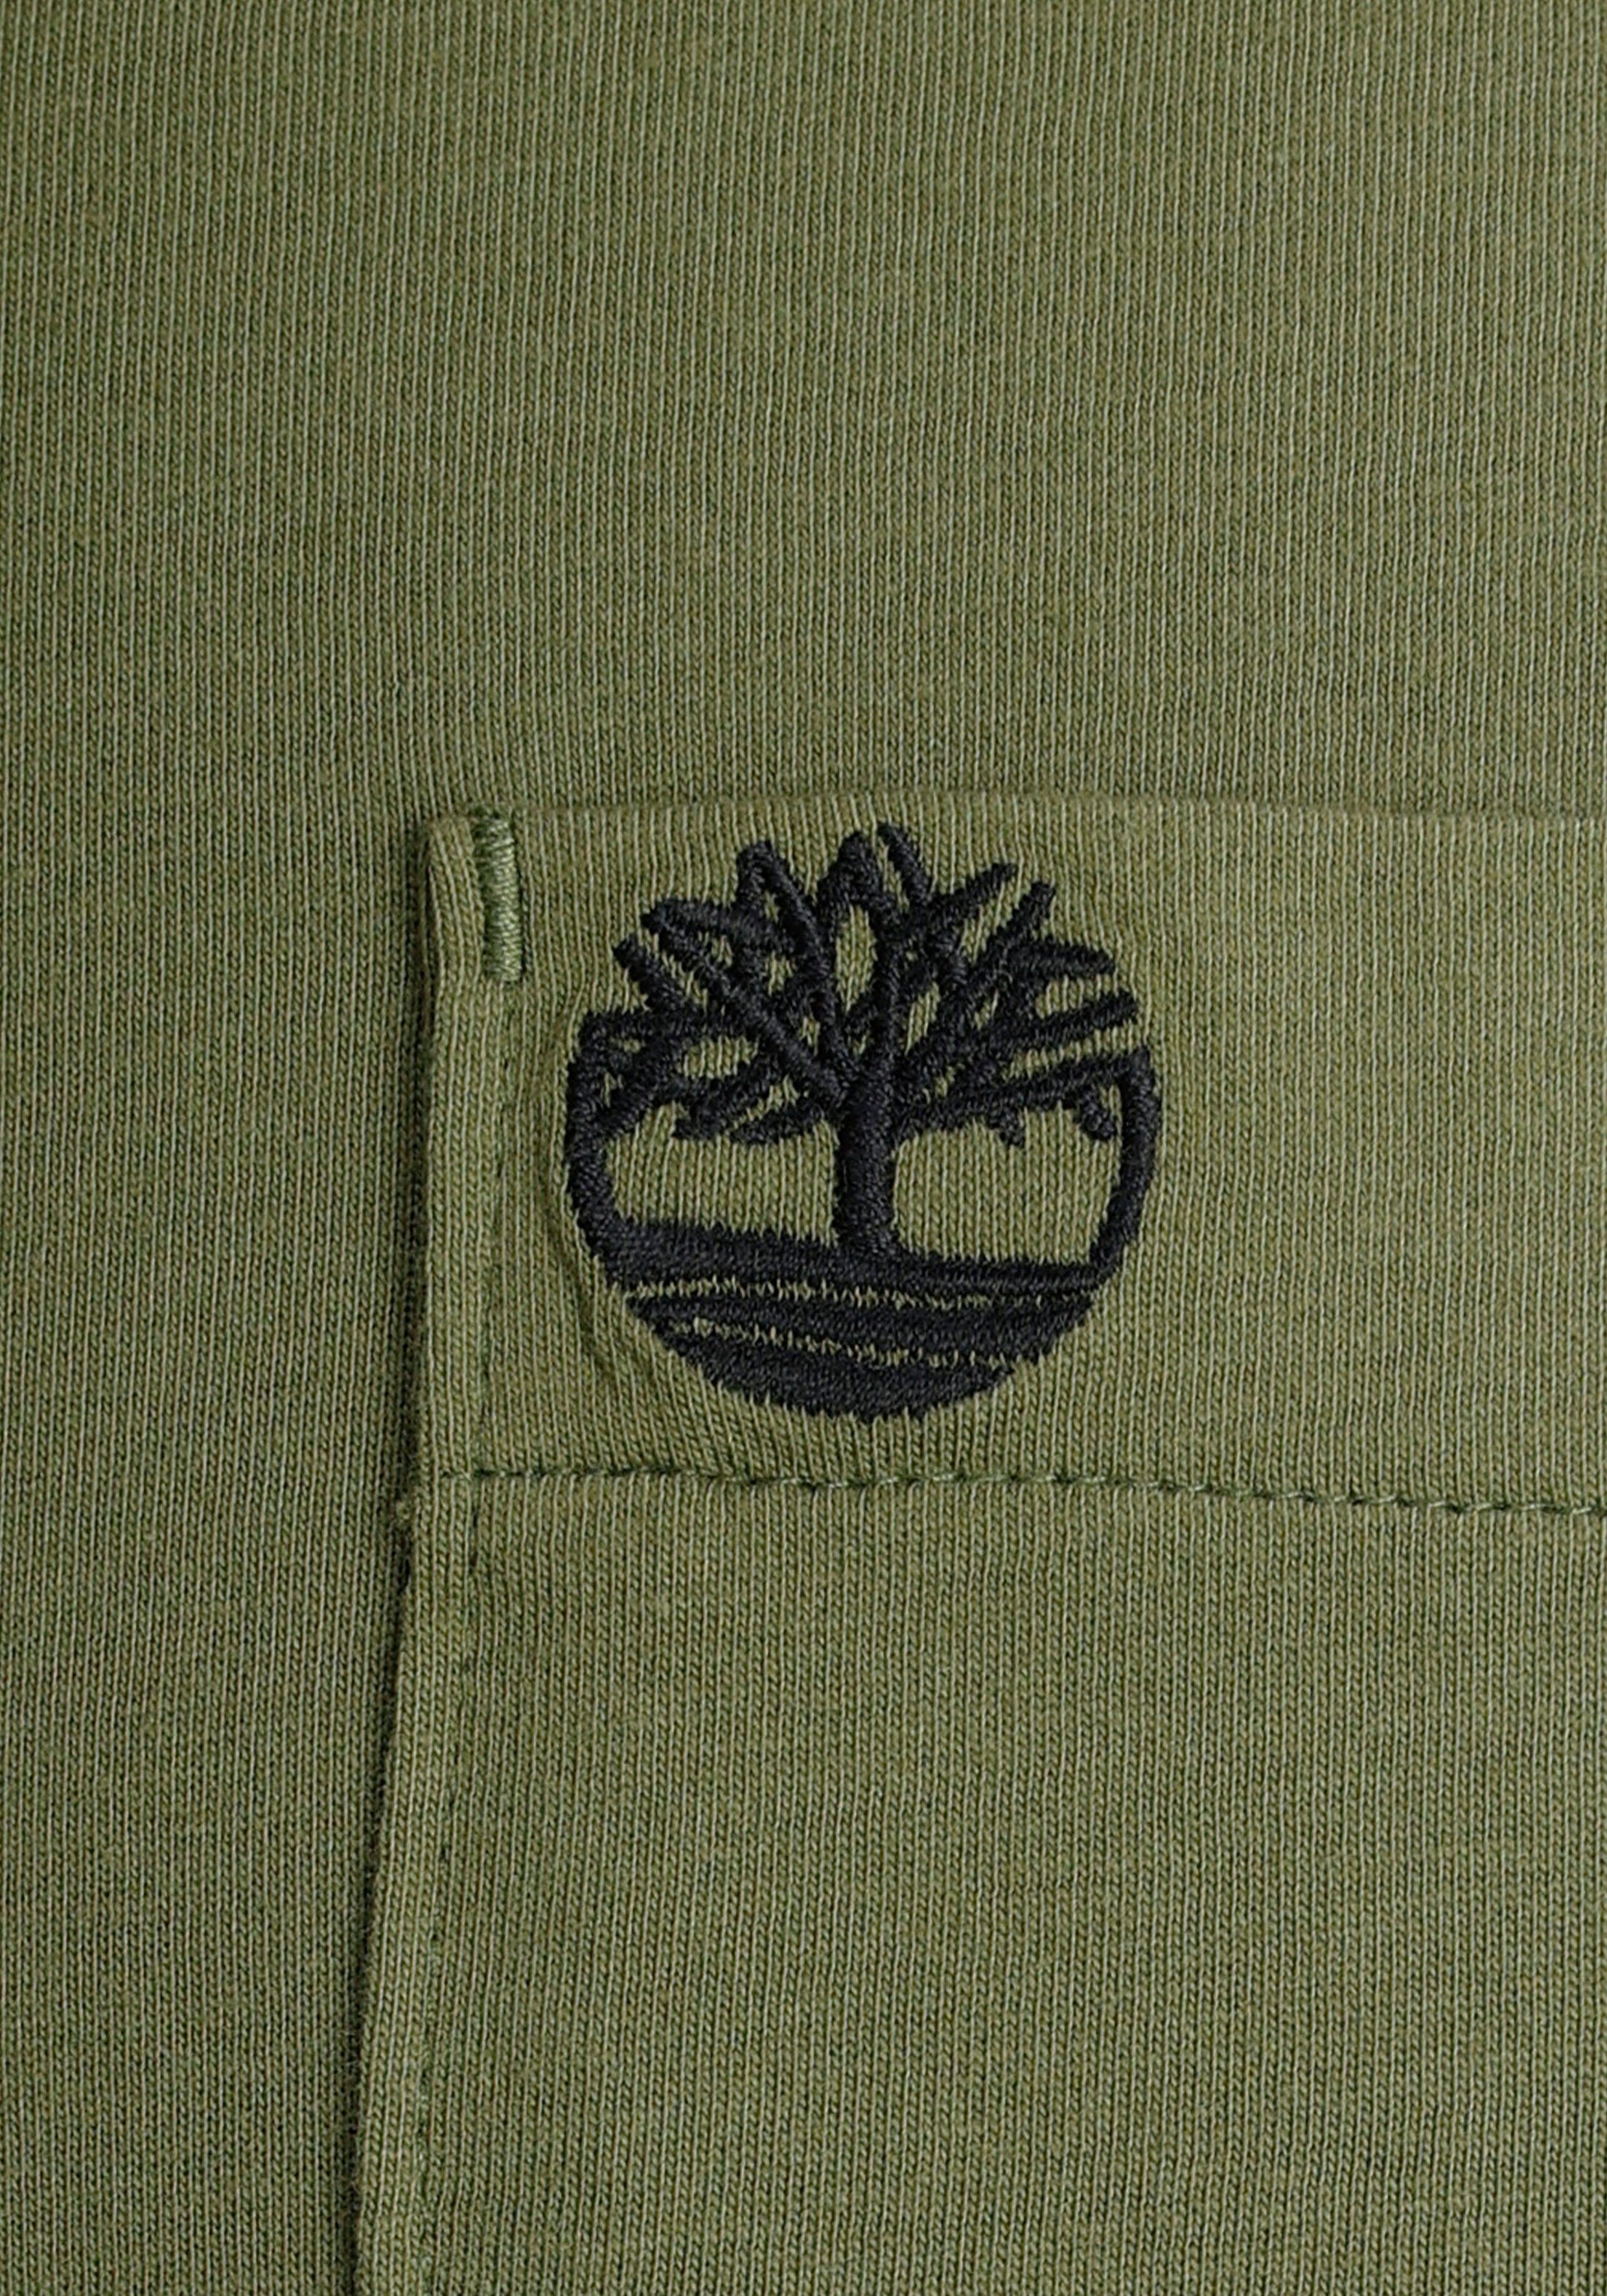 DUNSTAN TEE Timberland POCKET T-Shirt RIVER mayfly